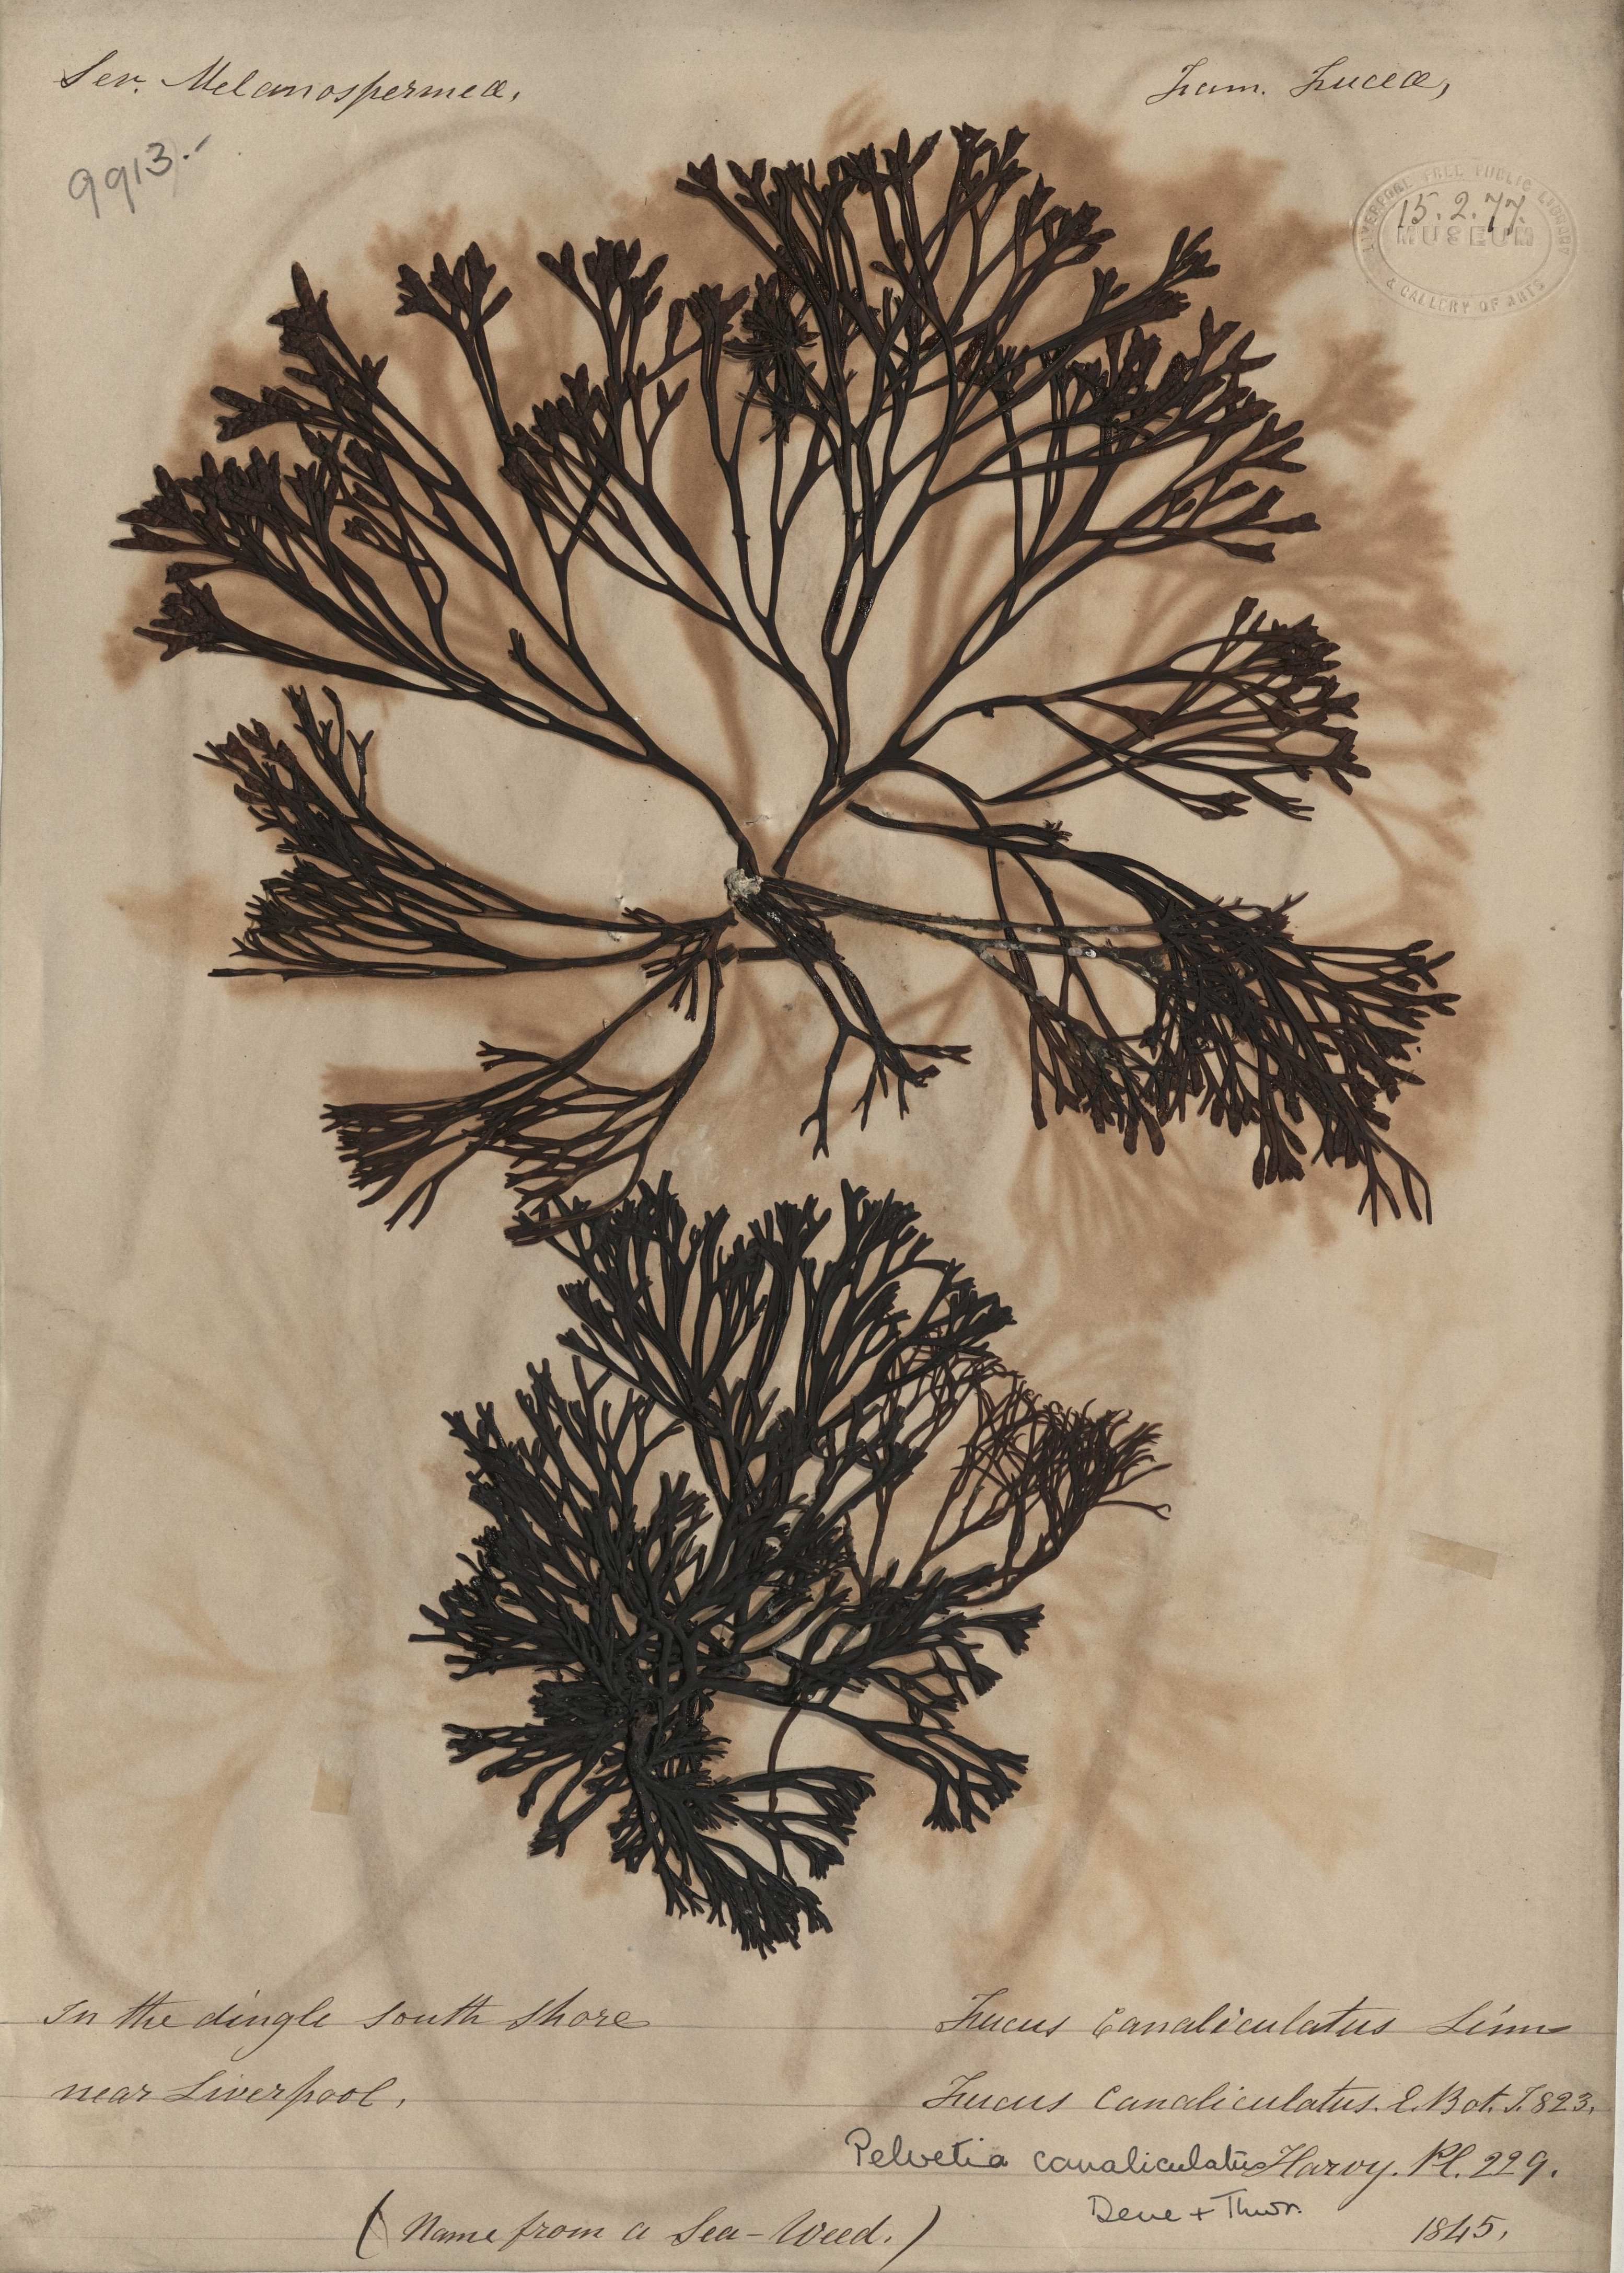 A herbaria (dried seaweed) sample